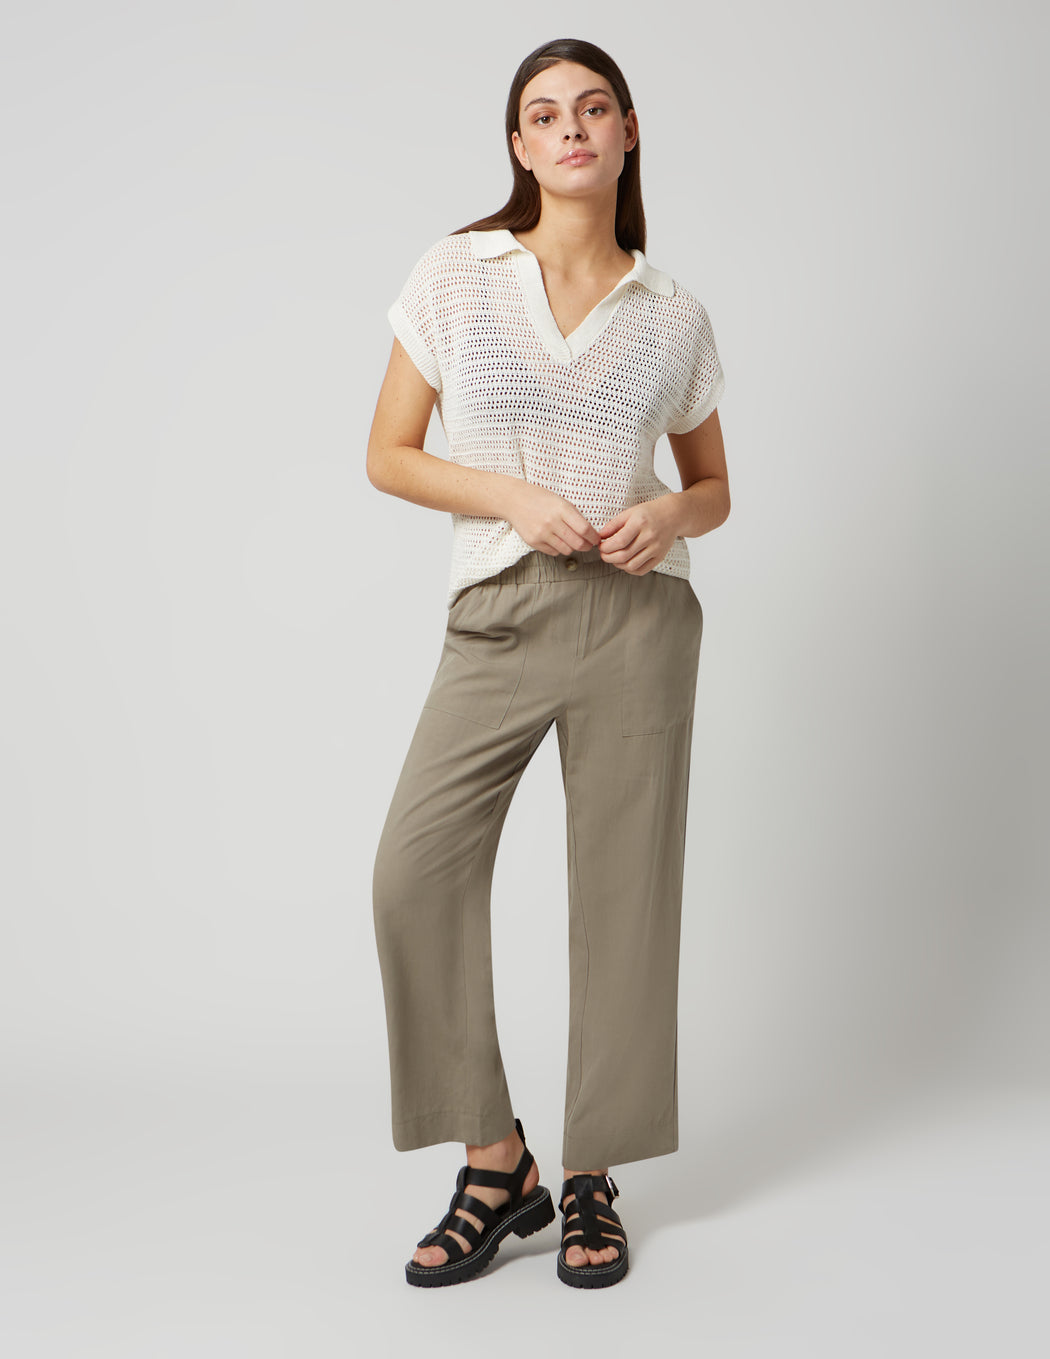 Womens Pants in 100% Organic Cotton [4374] - £12.00 : Cambridge